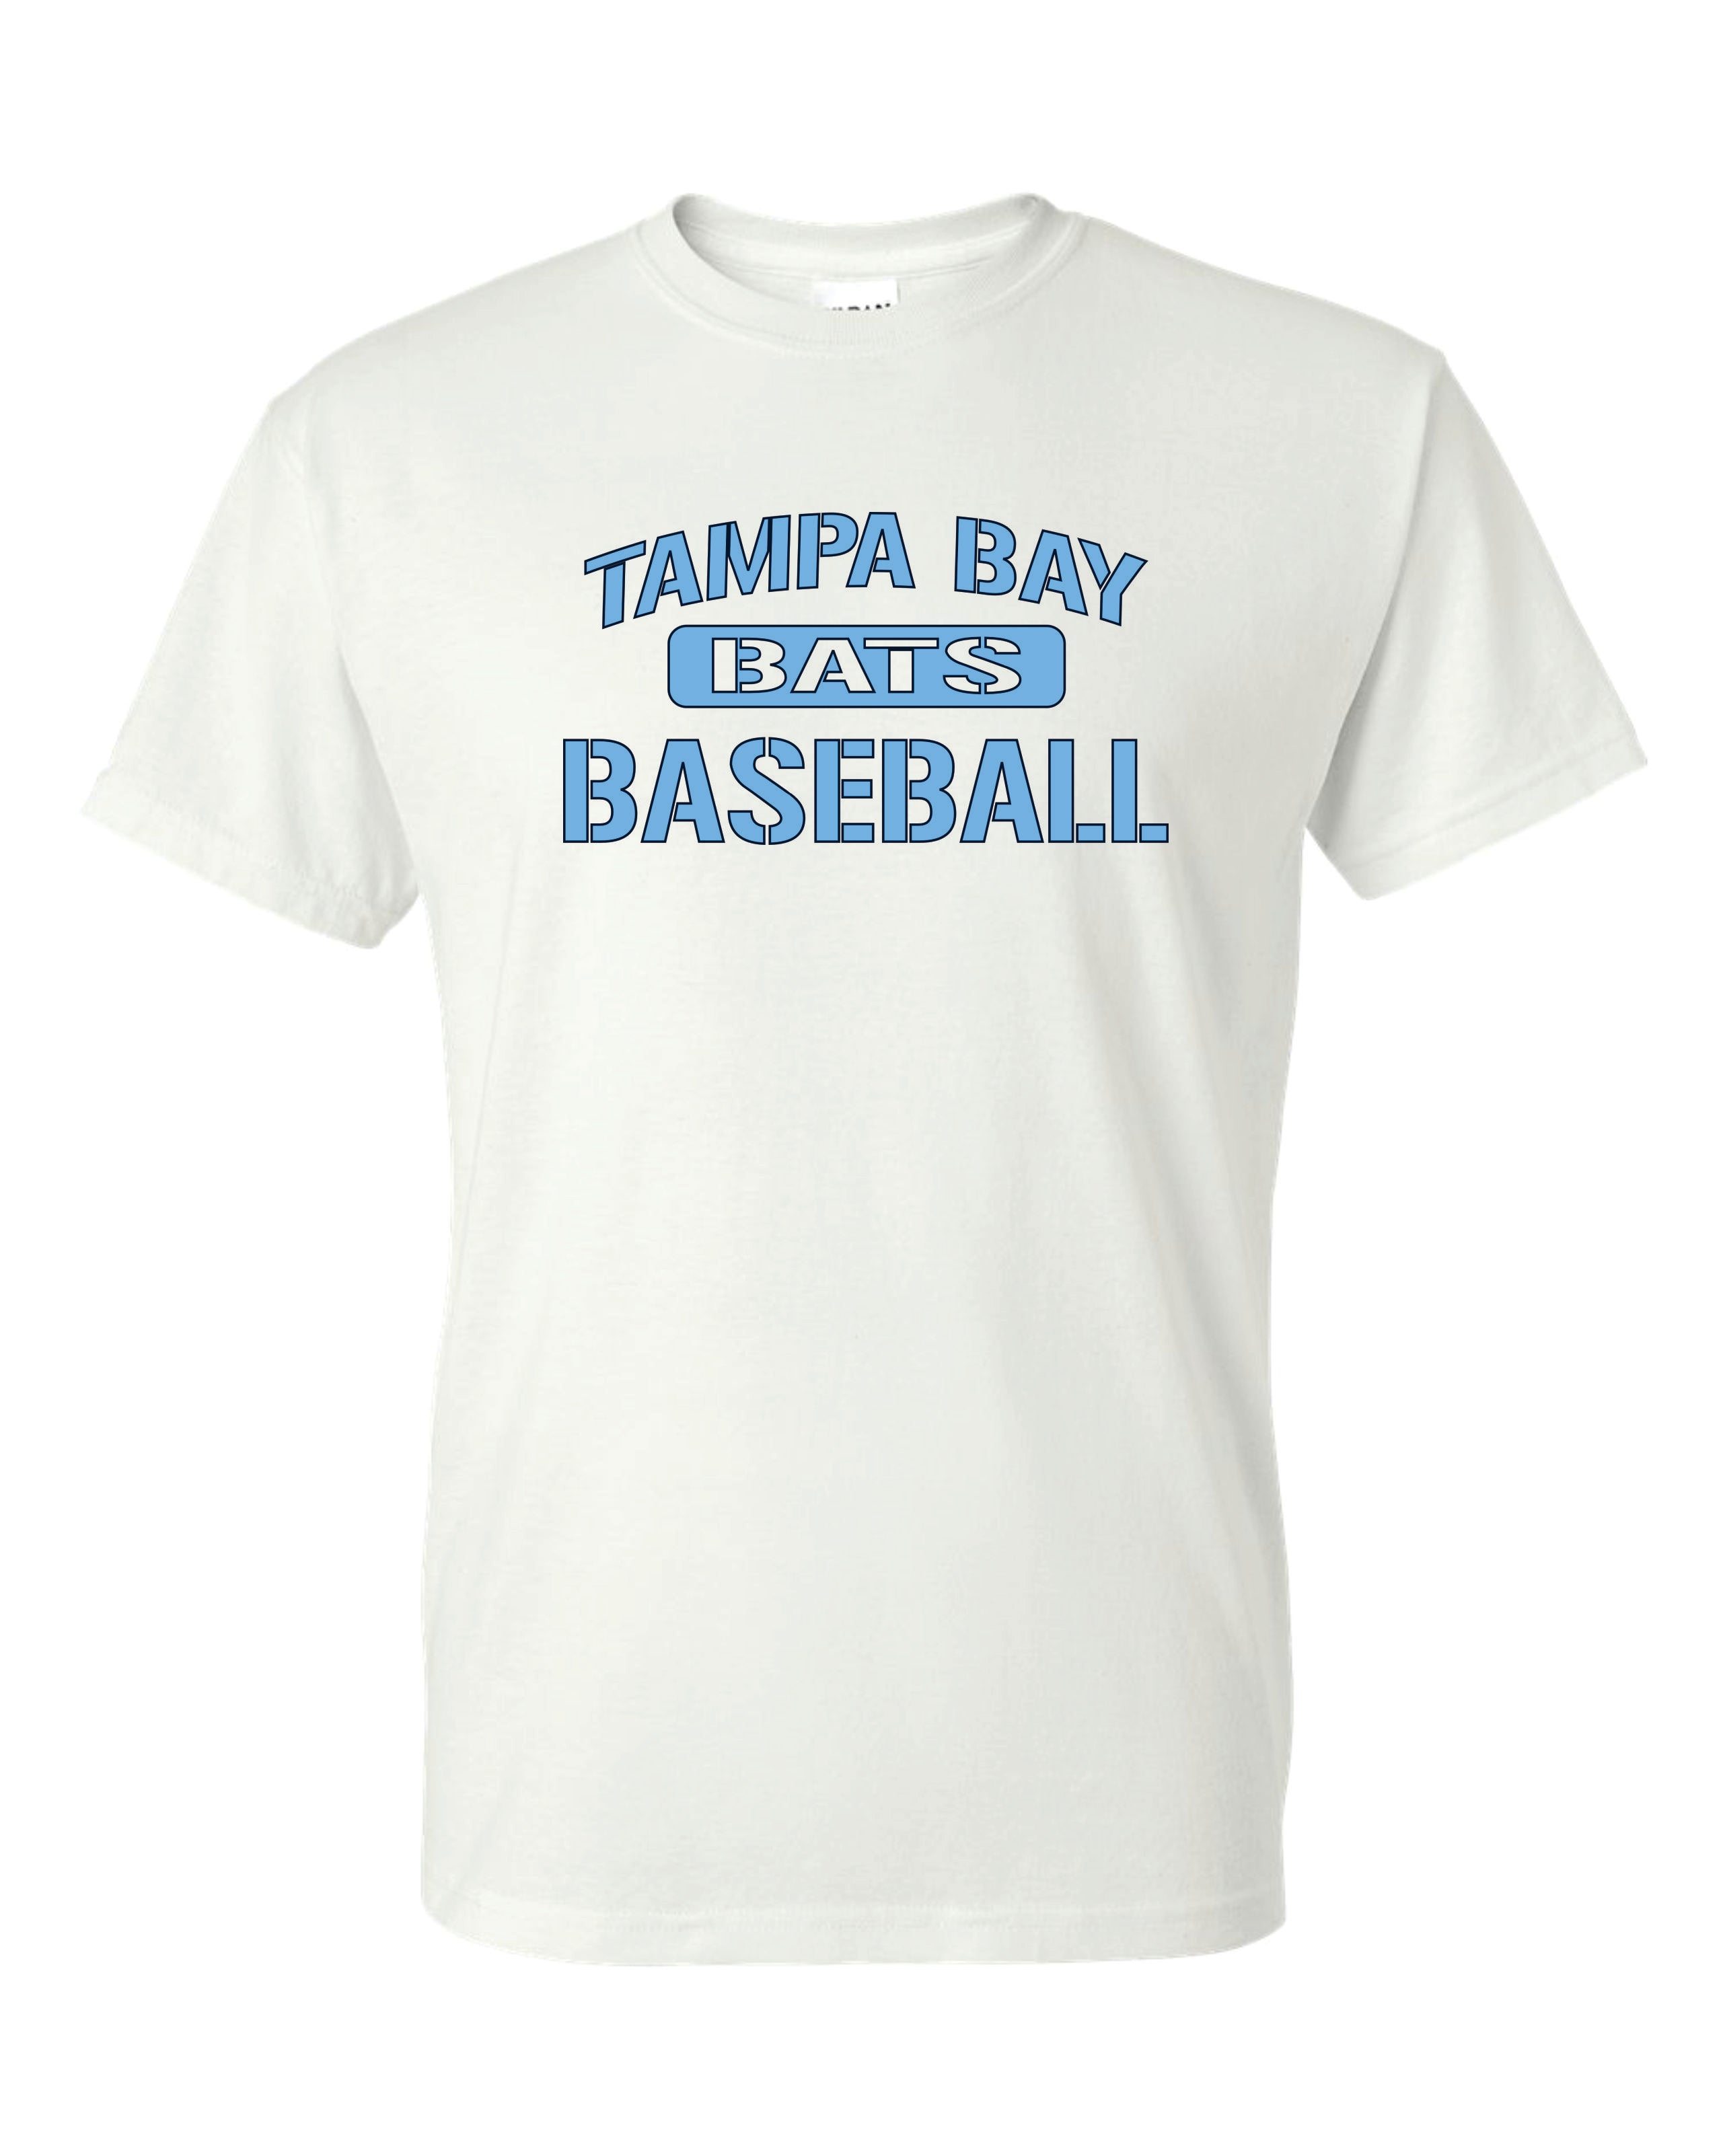 Tampa Bay Bats Short Sleeve T-Shirt 50/50 Blend YOUTH